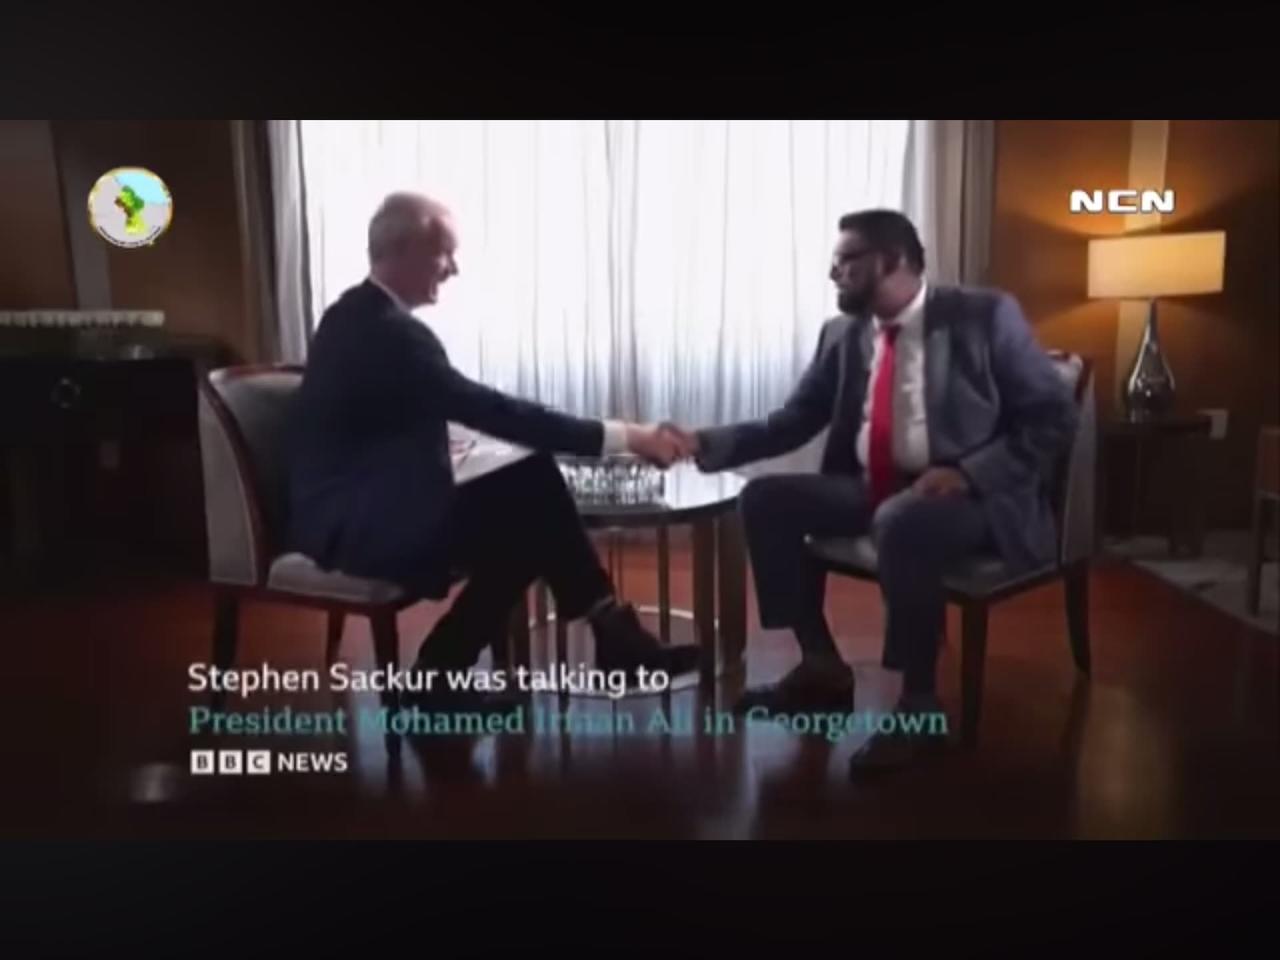 BBC’s Stephen Sackur gets destroyed by Guyana president Irfaan Ali / full interview